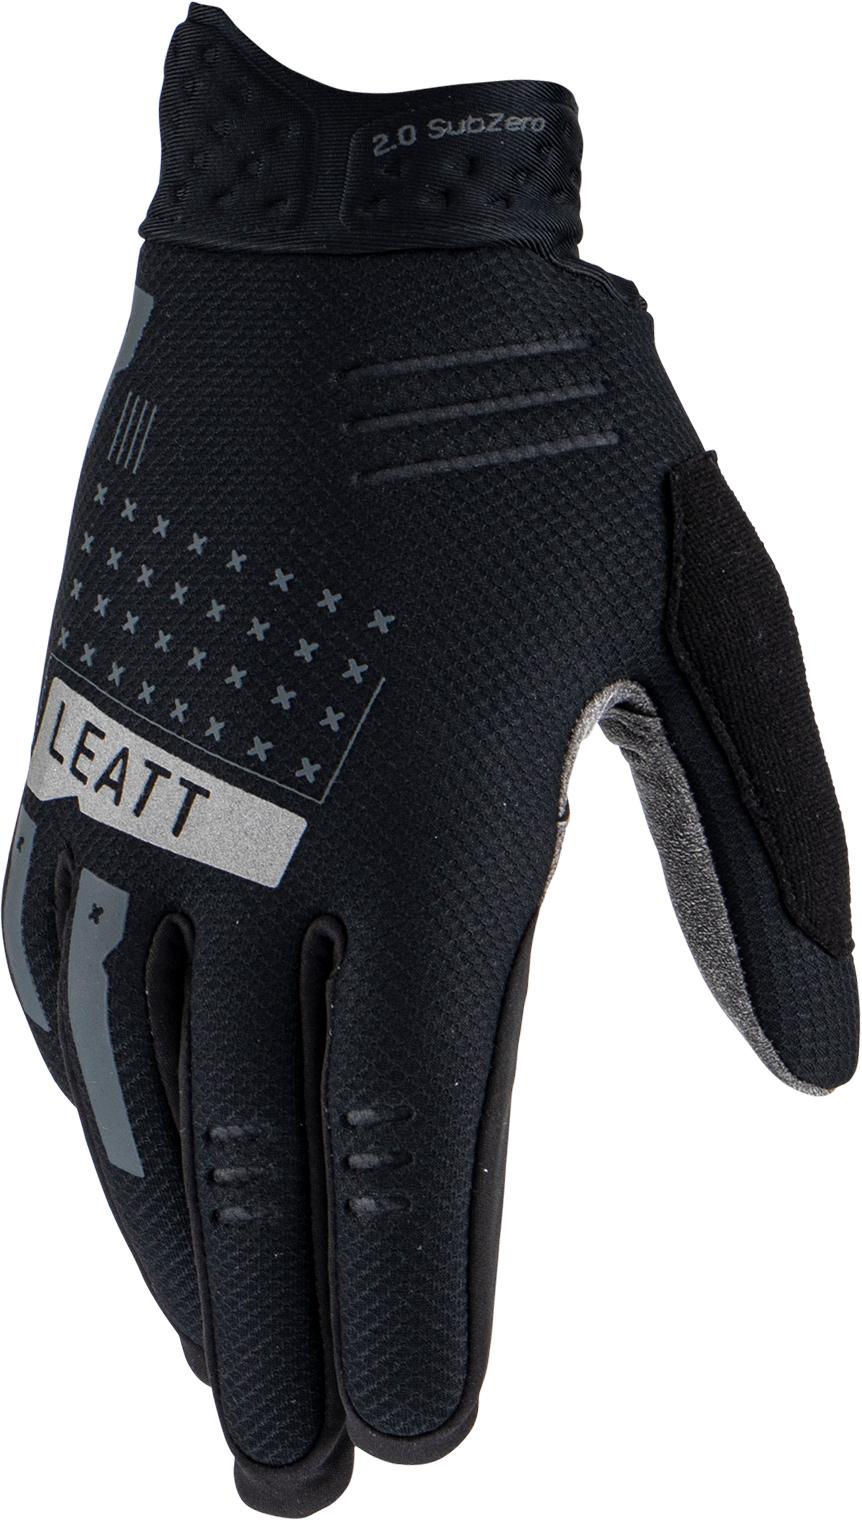 Leatt Mtb 2.0 Subzero Gloves  Black